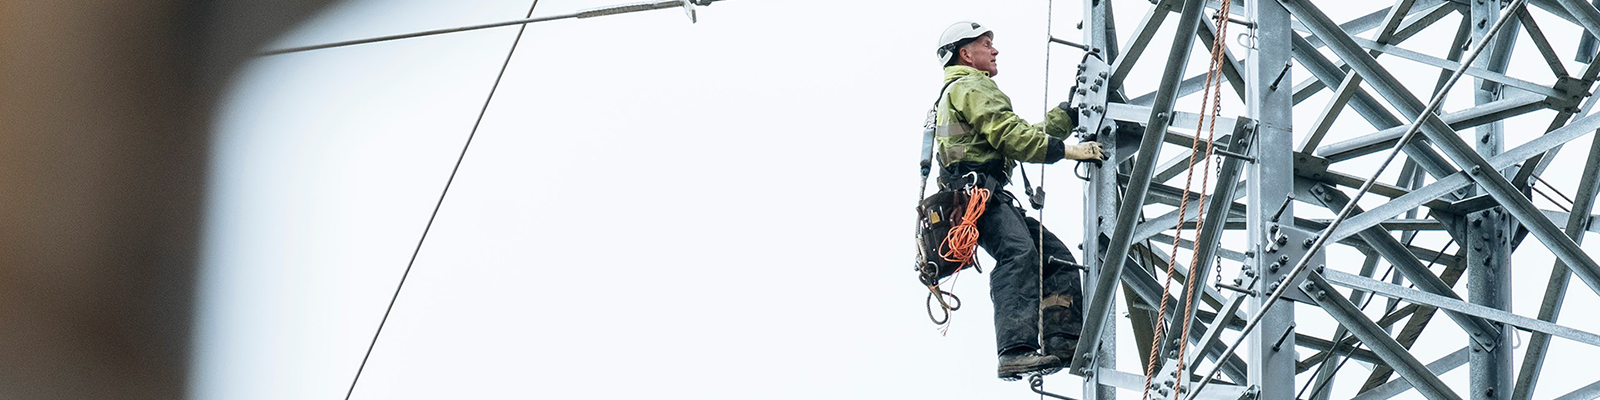 technician climbing on a high-voltage pylon